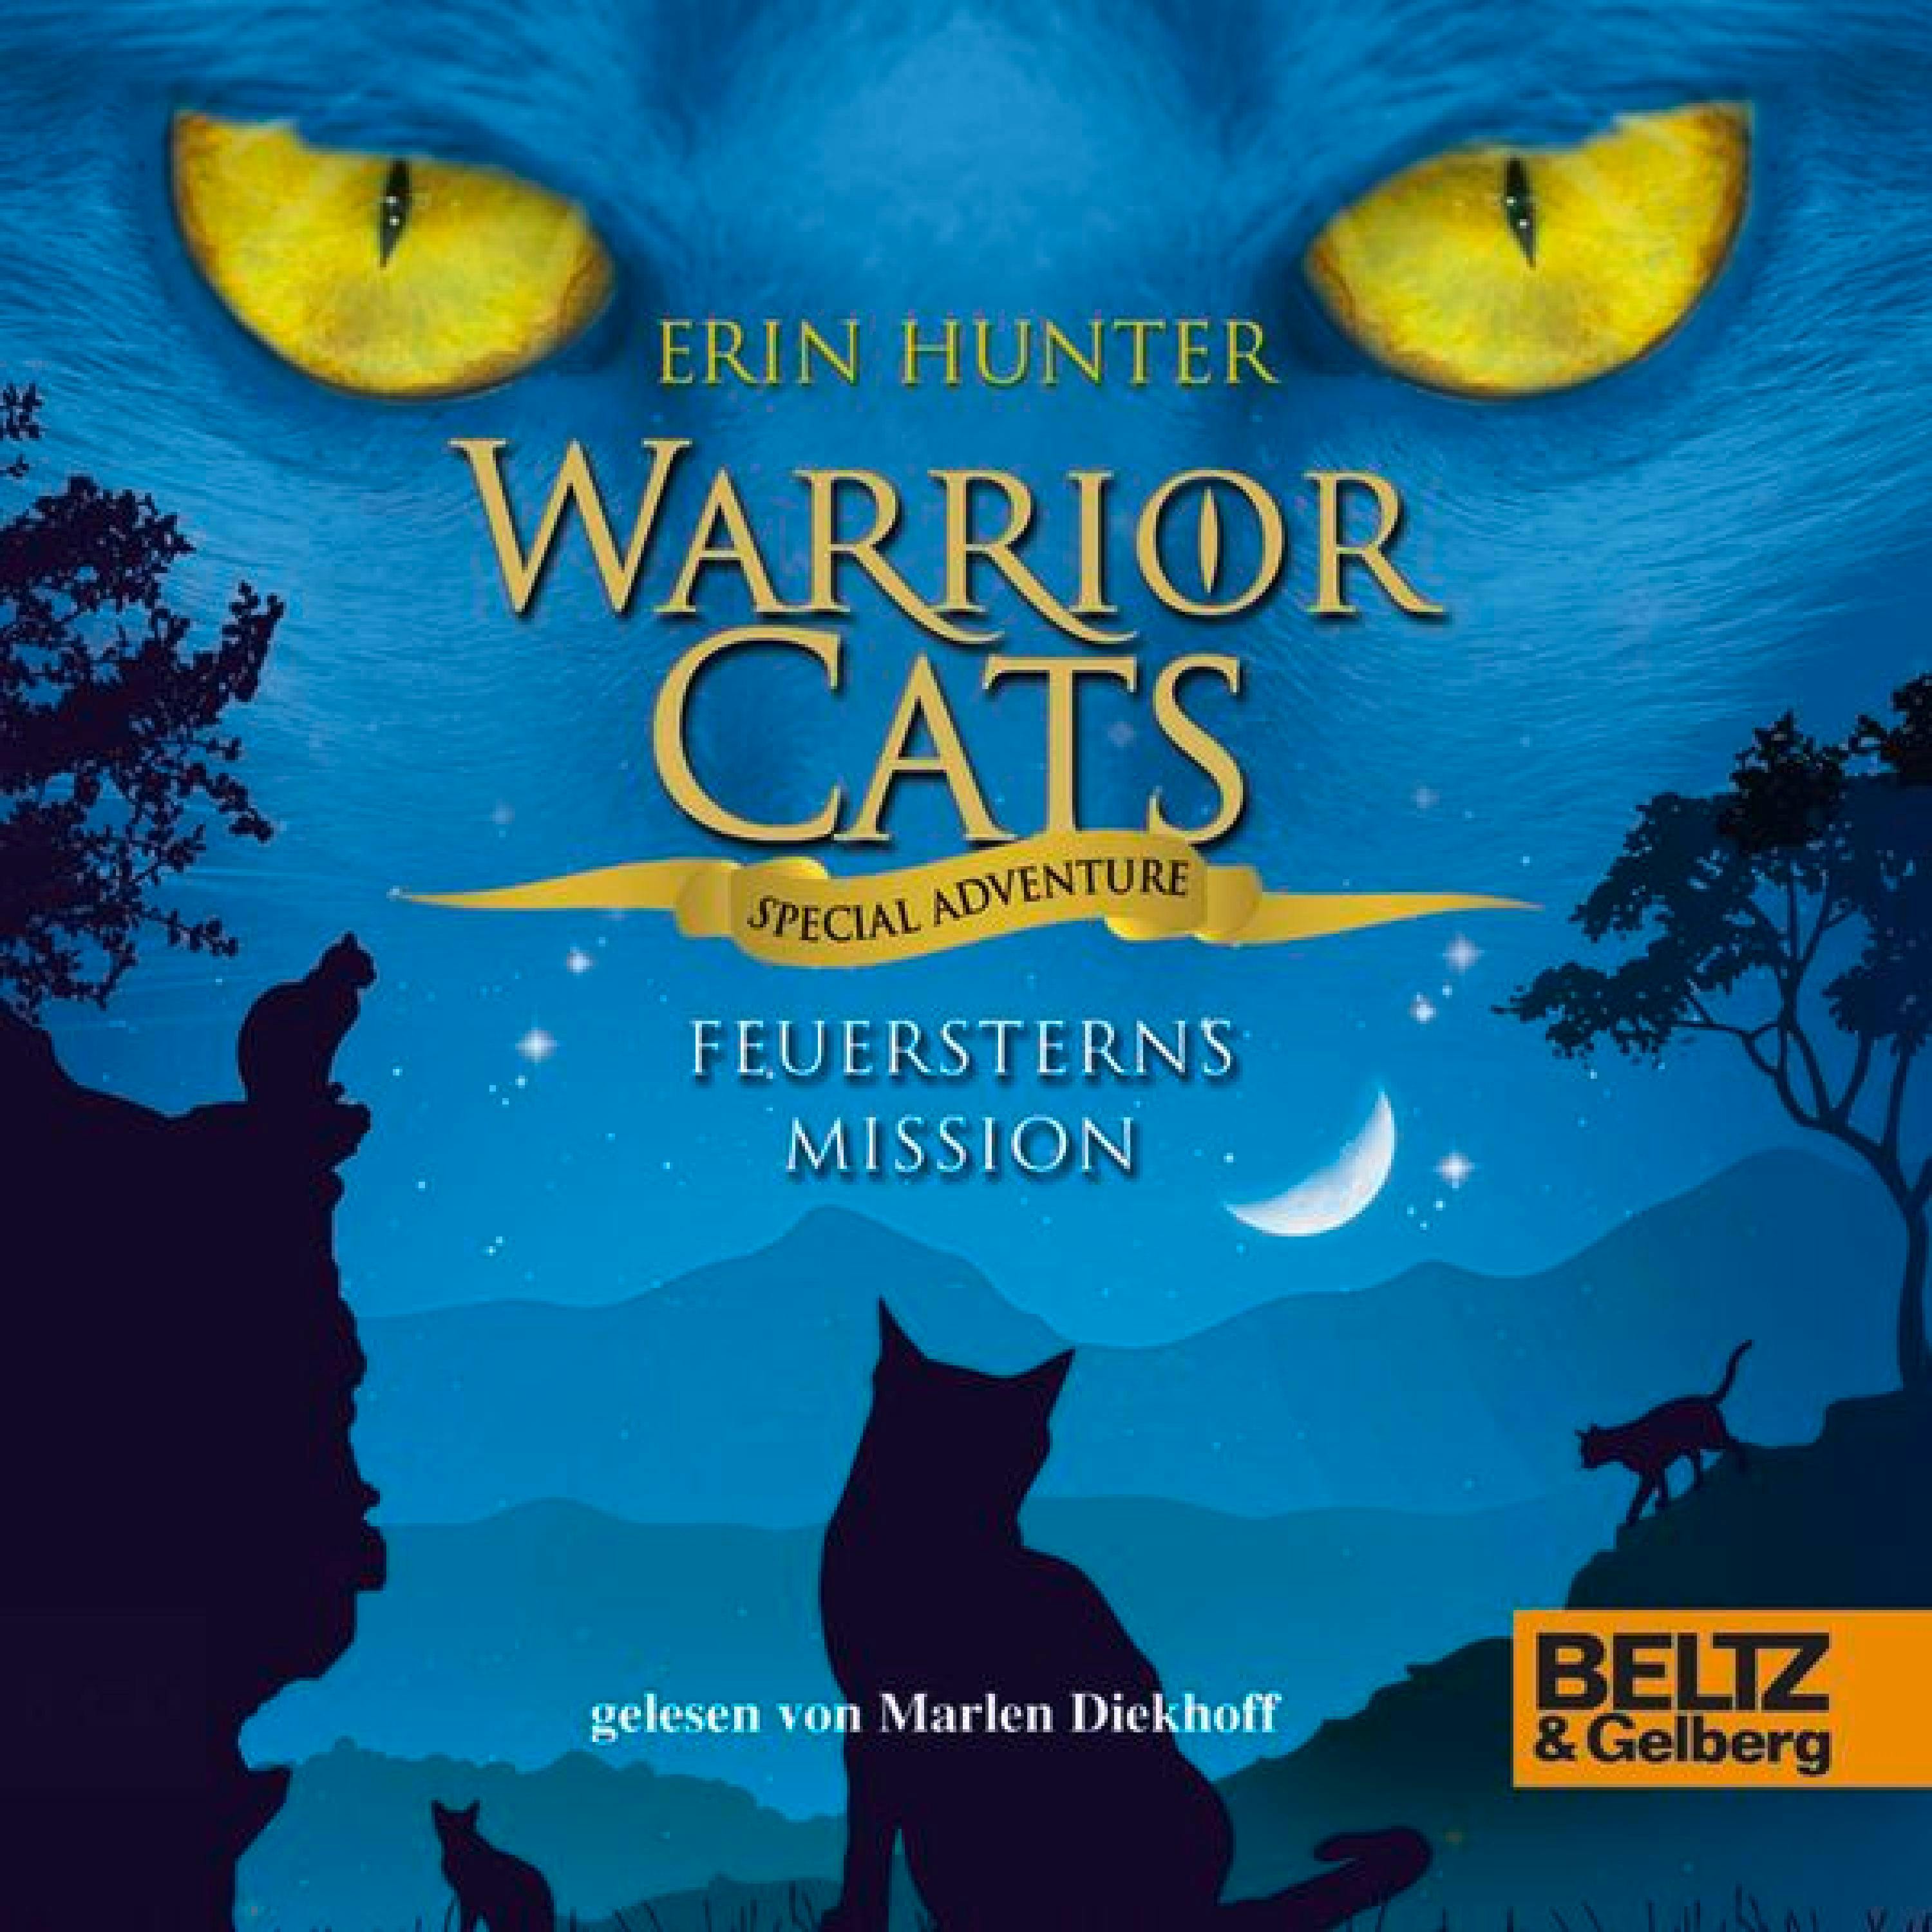 Warrior Cats - Special Adventure. Feuersterns Mission - undefined